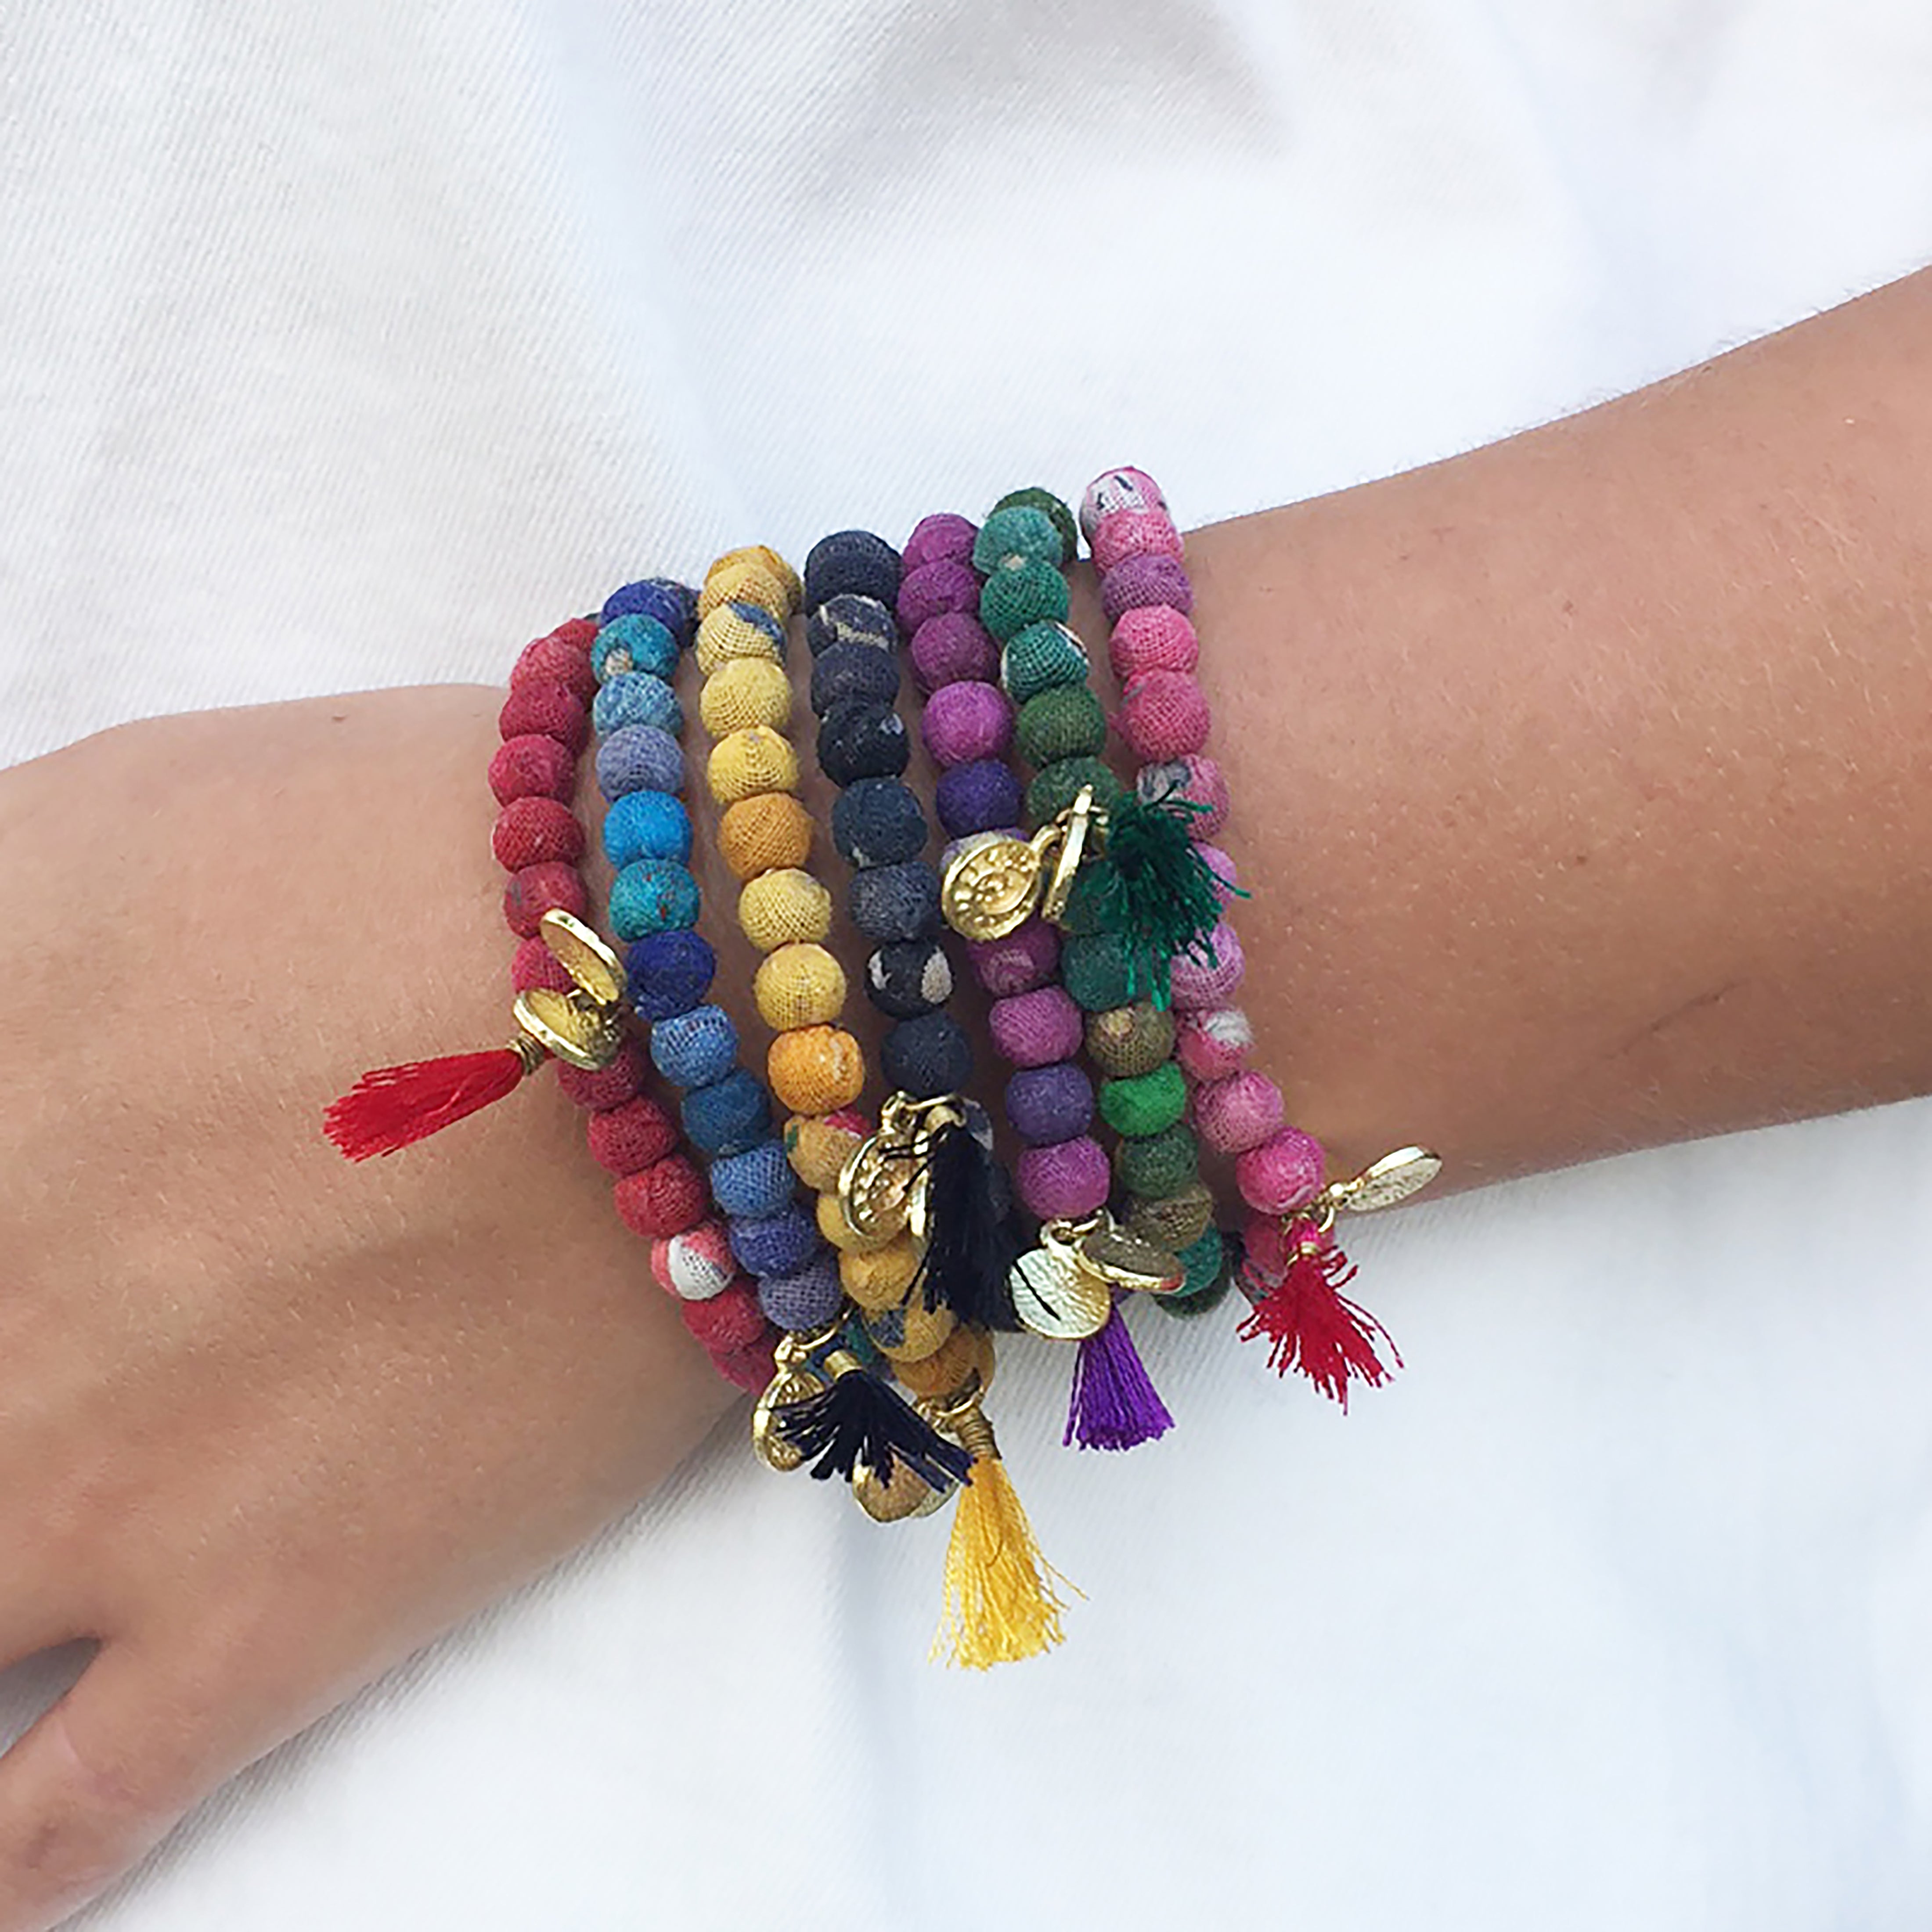 Multiple Kantha Connection bracelets adorn a wrist.